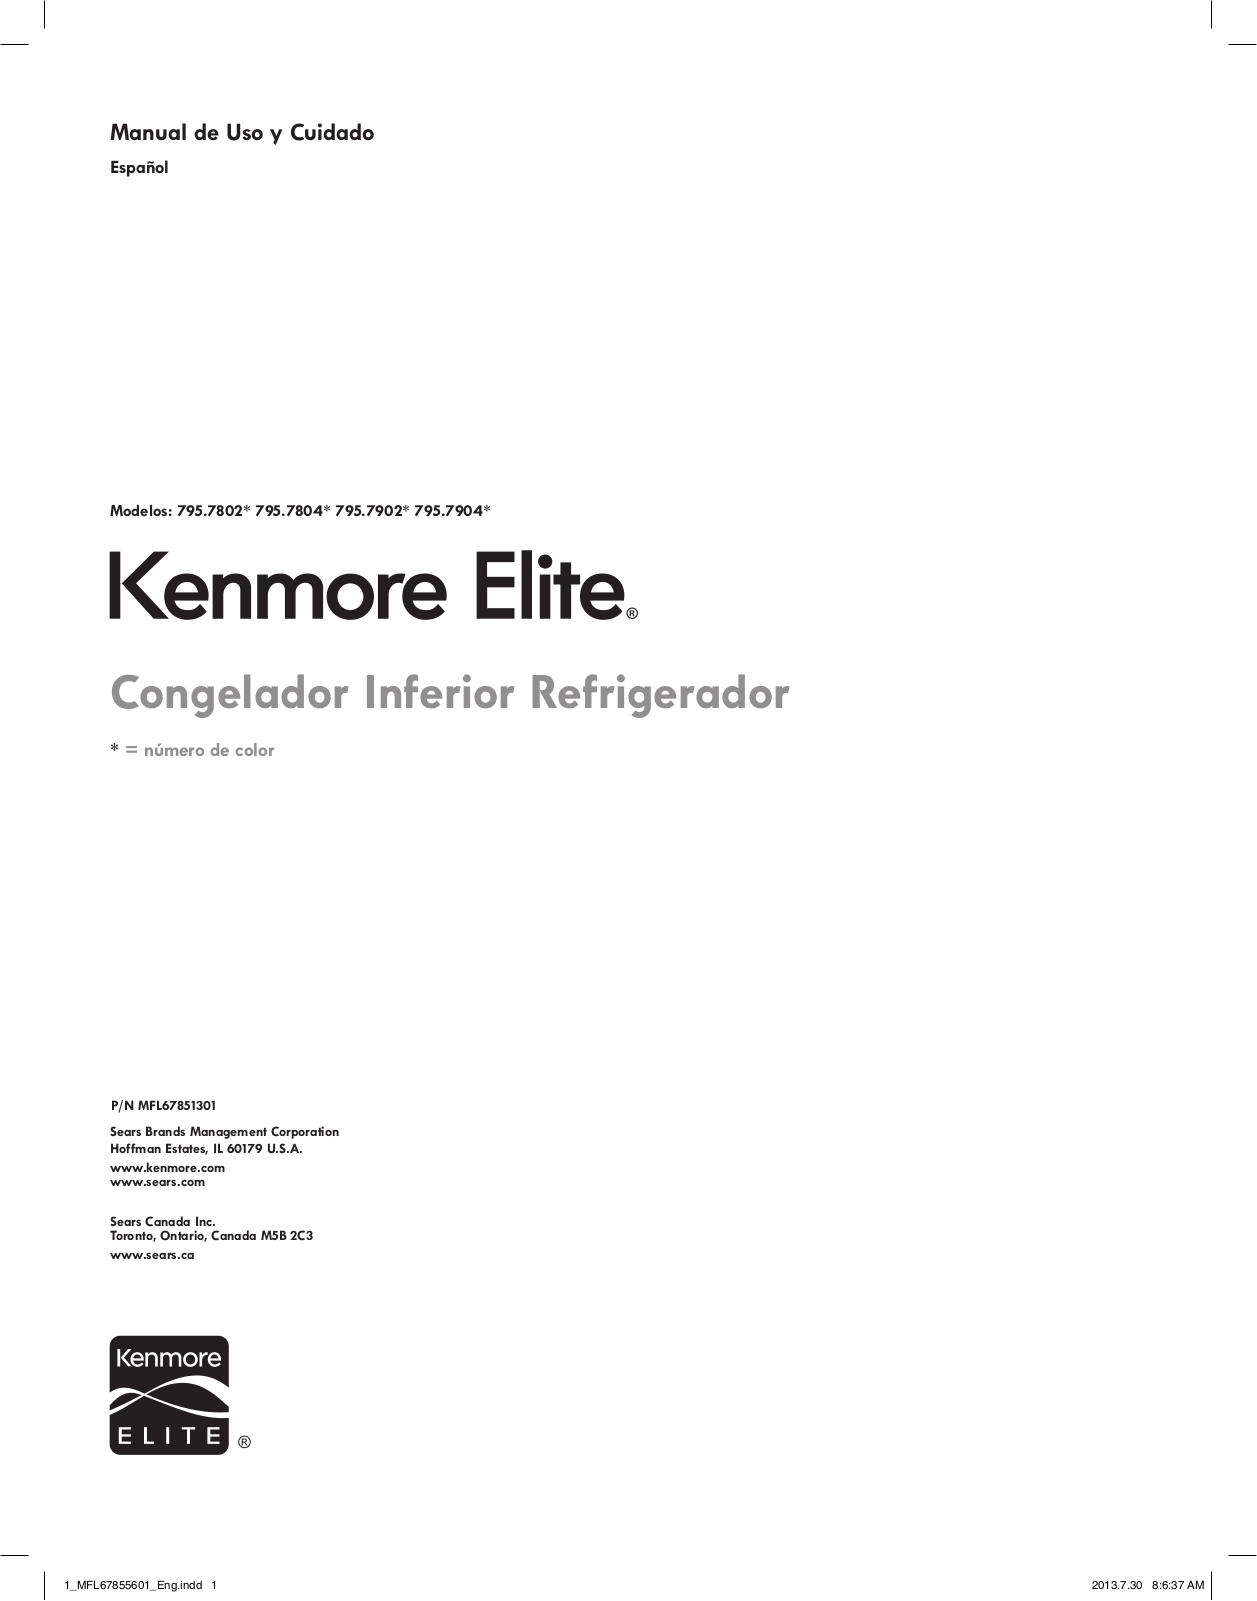 Kenmore Elite 24 cu. ft. Bottom-Freezer Refrigerator, Elite 22 cu. ft. Bottom-Freezer Refrigerator Owner's Manual